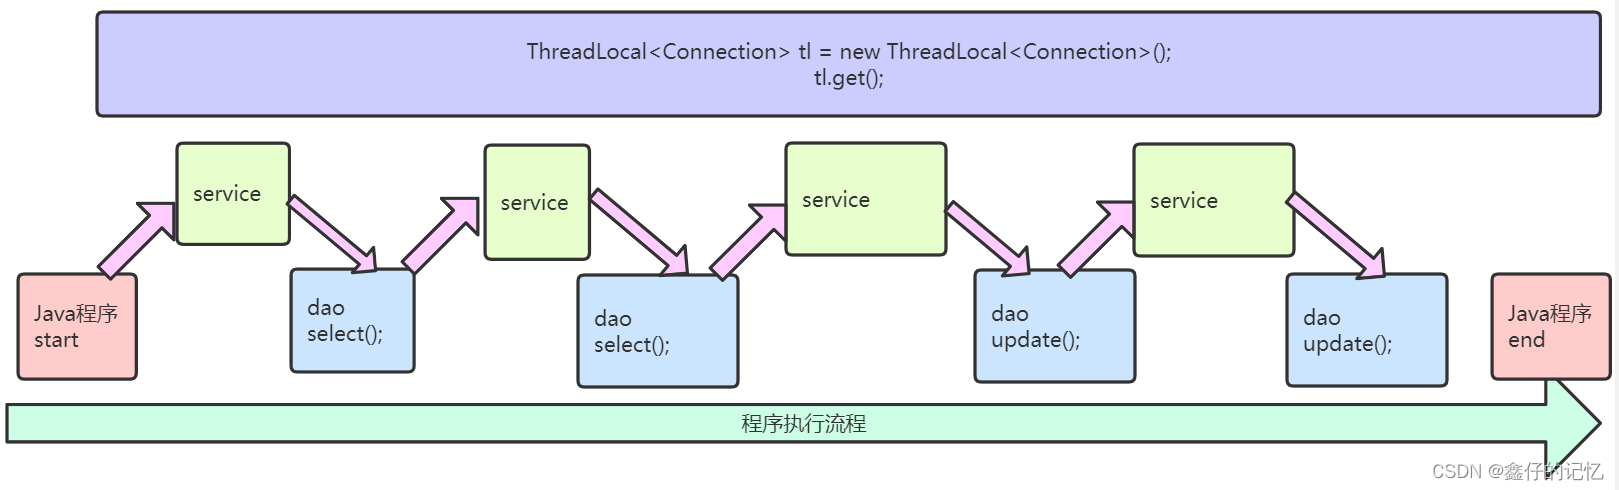 ThreadLocal核心流程